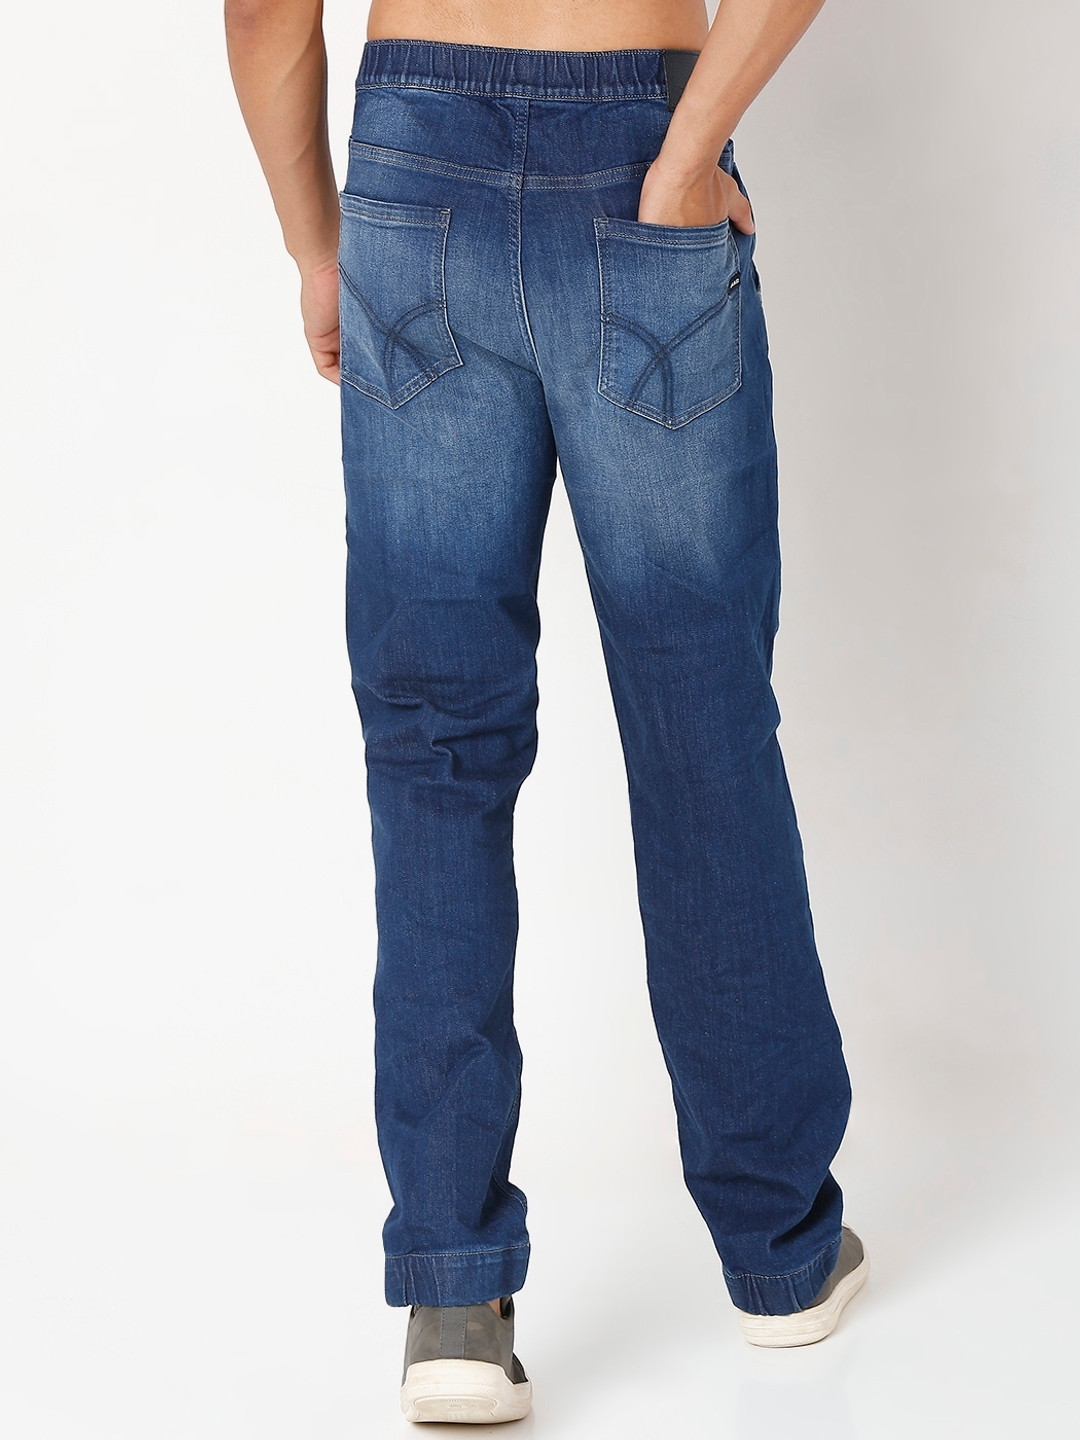 NEW Foundry Athletic Fit Size 50x30 Mens Denim Pants Advance Flex 360 Gray  Jeans | eBay